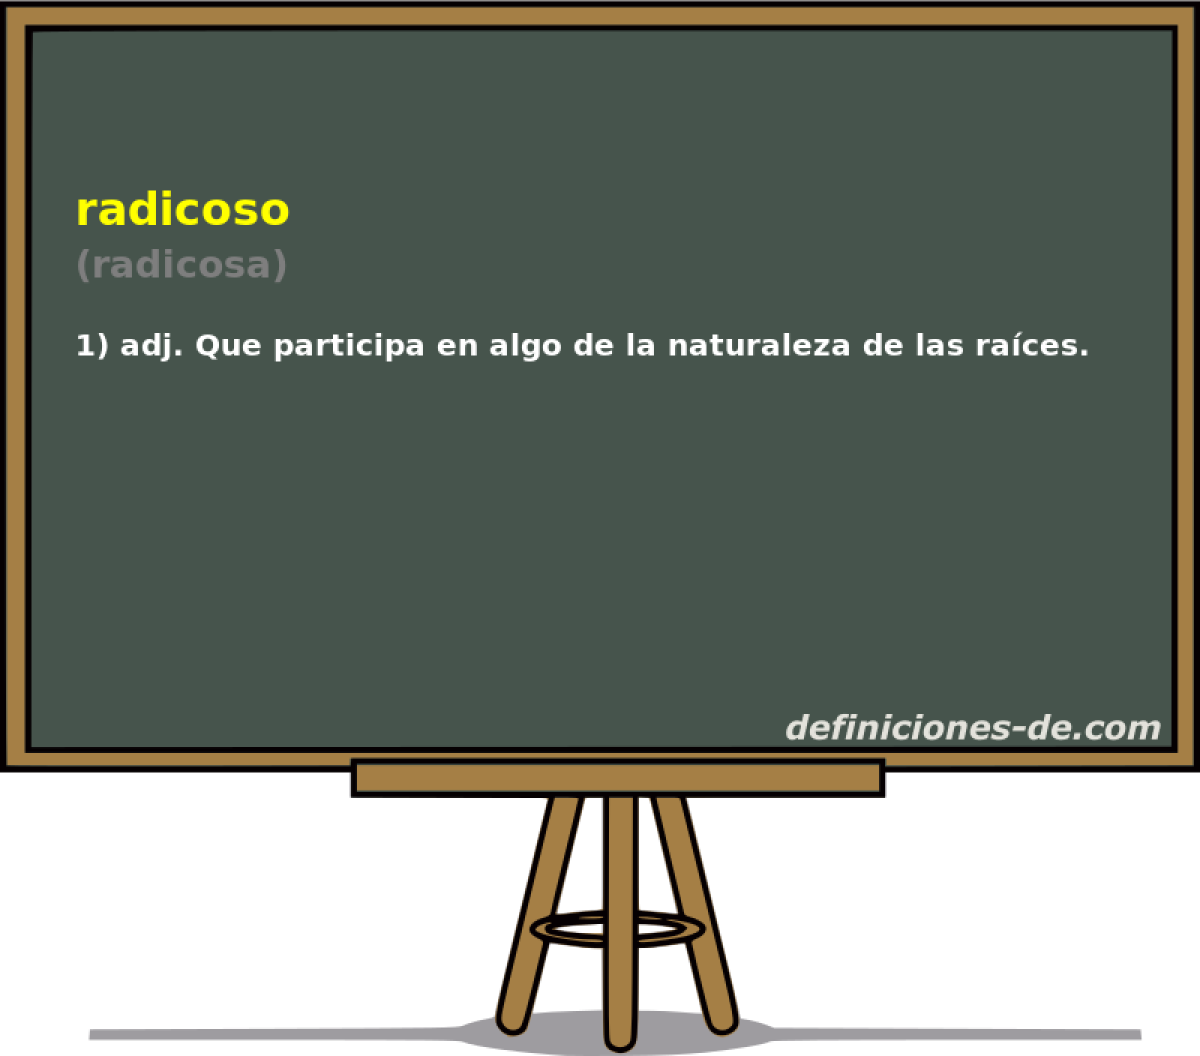 radicoso (radicosa)